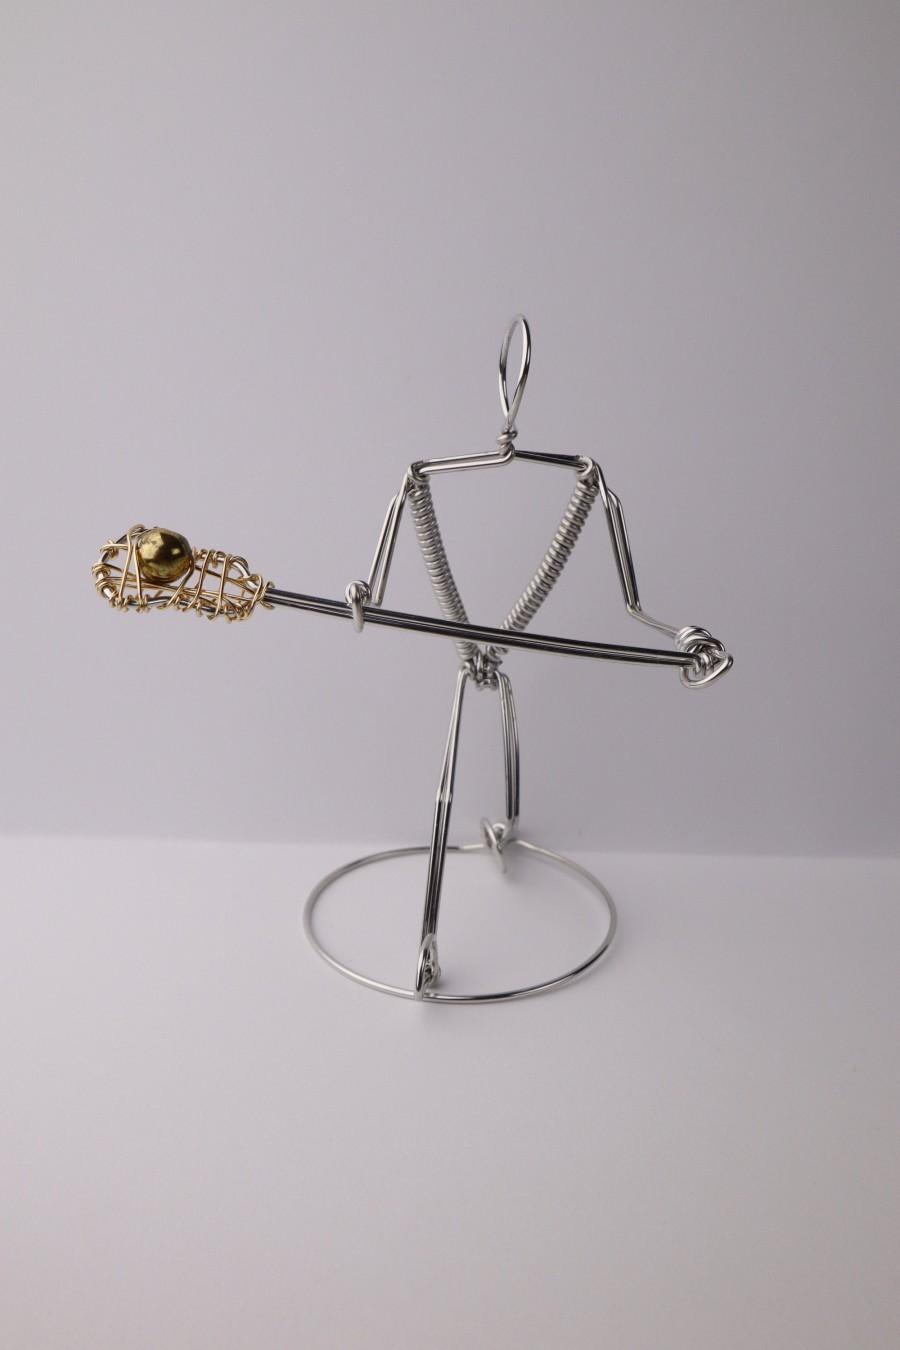 Hochzeit - LACROSSE PLAYER ORNAMENT, Freestanding Miniature Wire Sculpture, Gift for Sports Fans